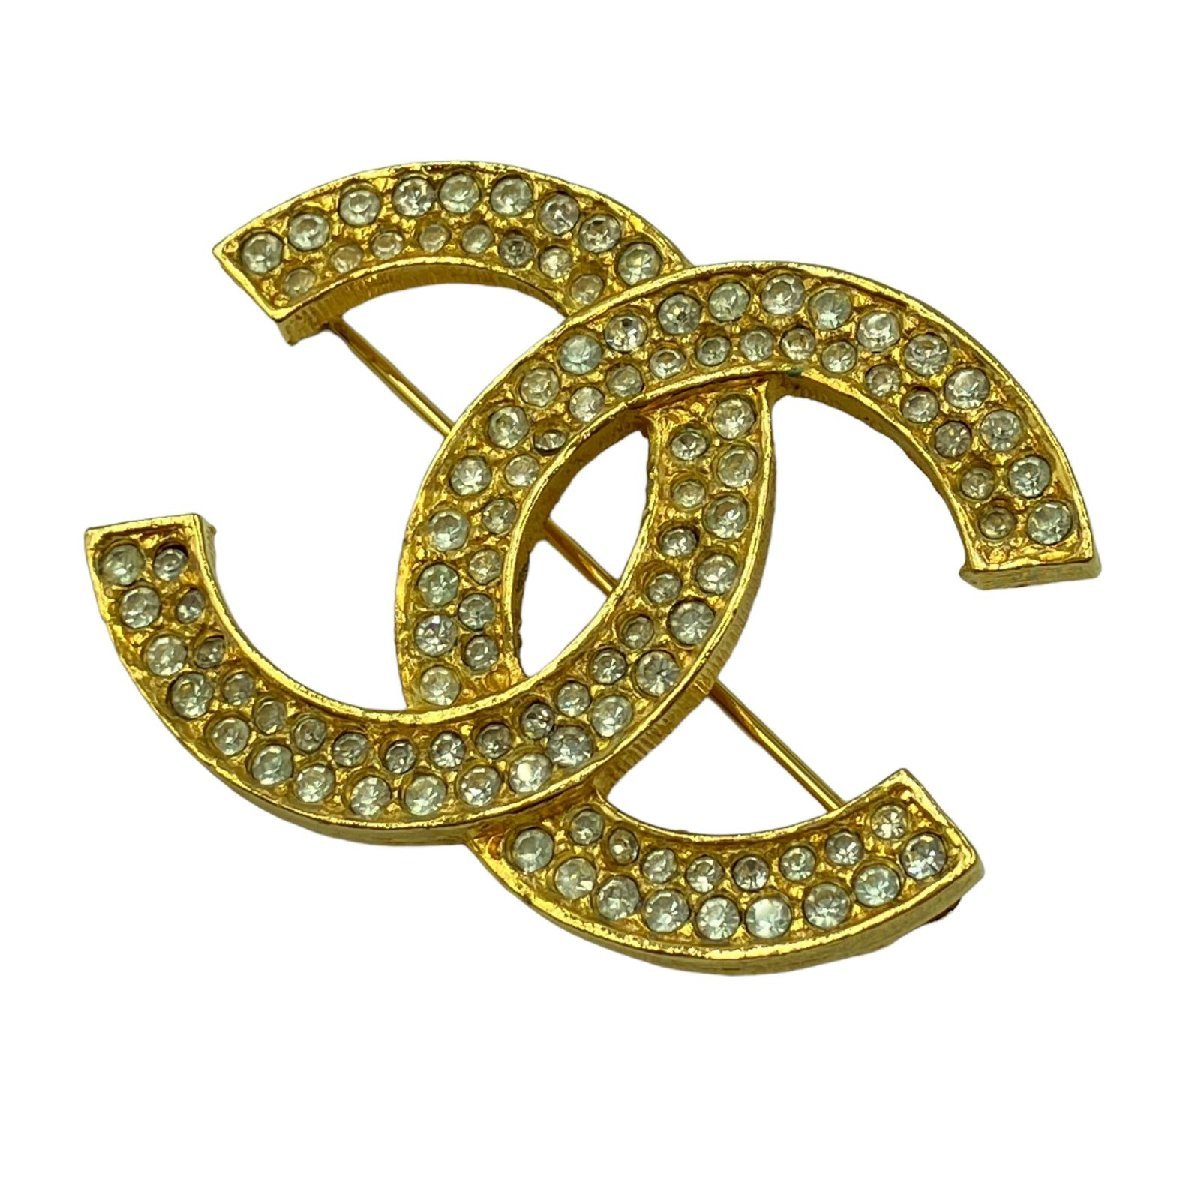 Gold Metal CC Chanel Paris Brooch, 2021